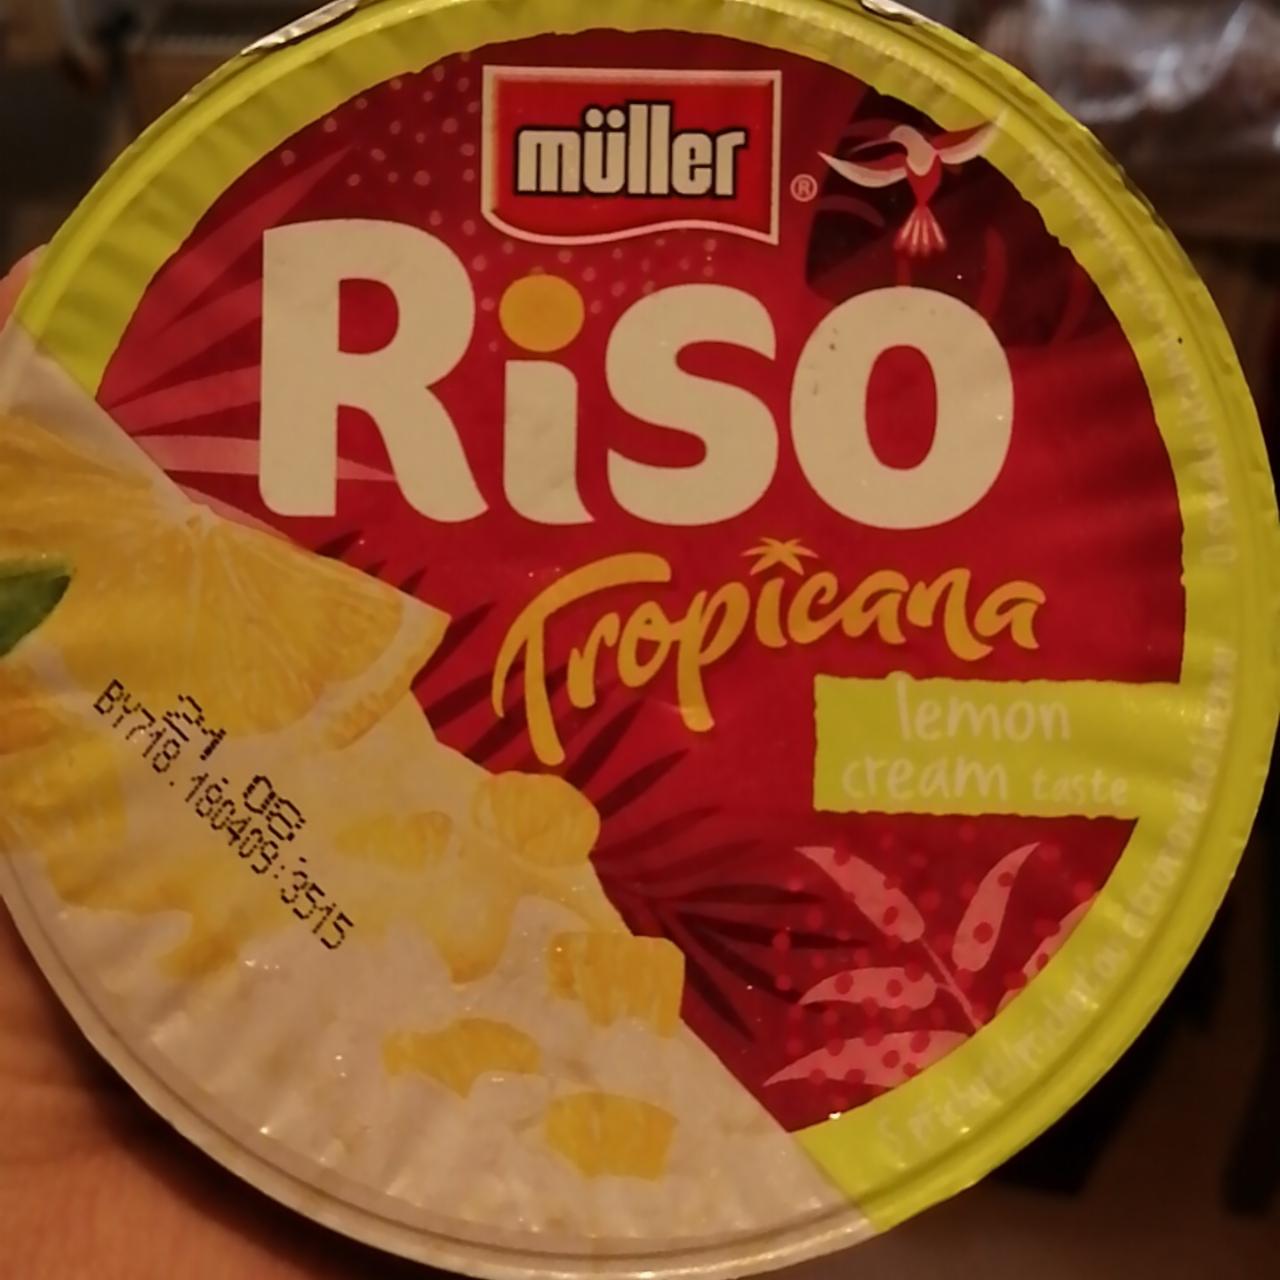 Képek - Riso Tropicana lemon cream taste Müller